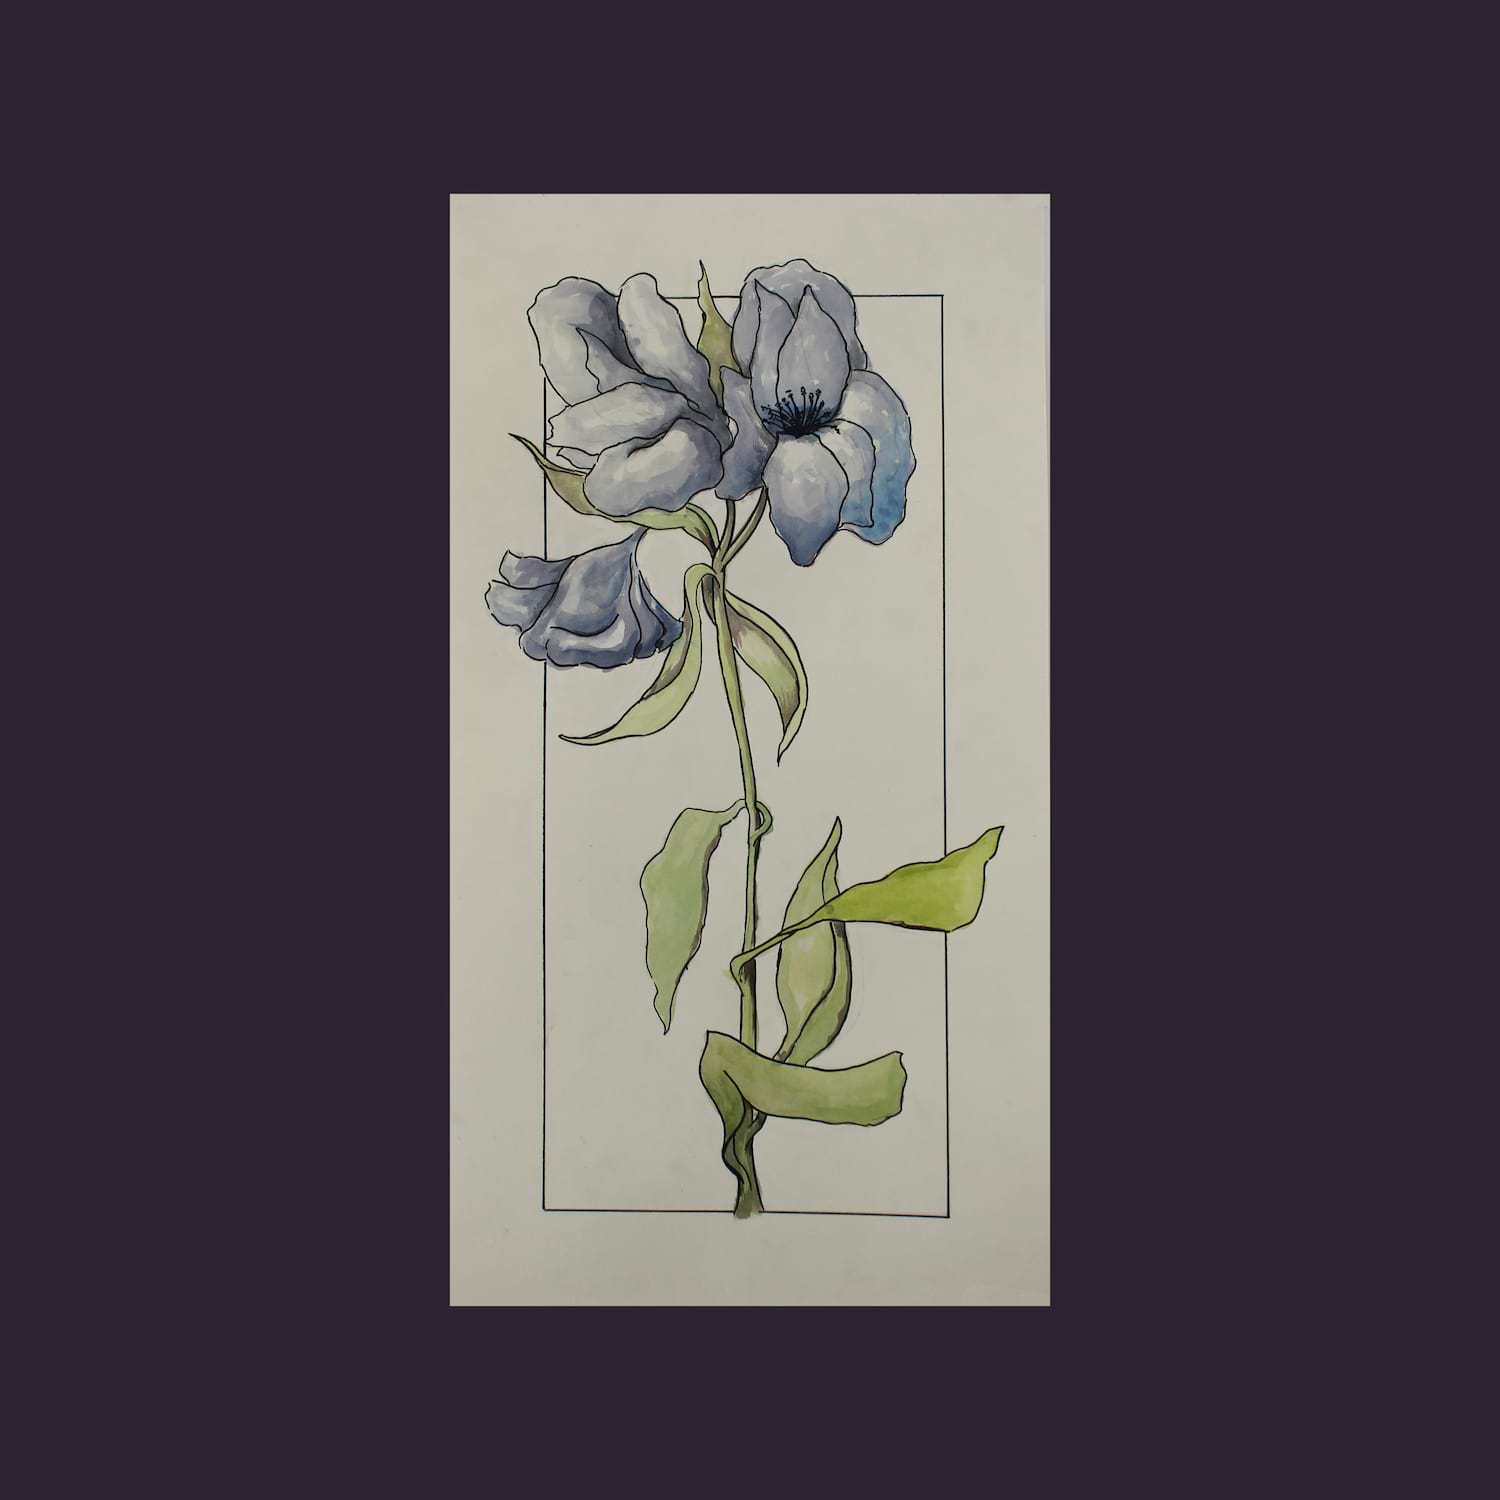  Gabrielle Verbeke-O'Boyle. Blue Flower with Border. Mixed media. 2020.